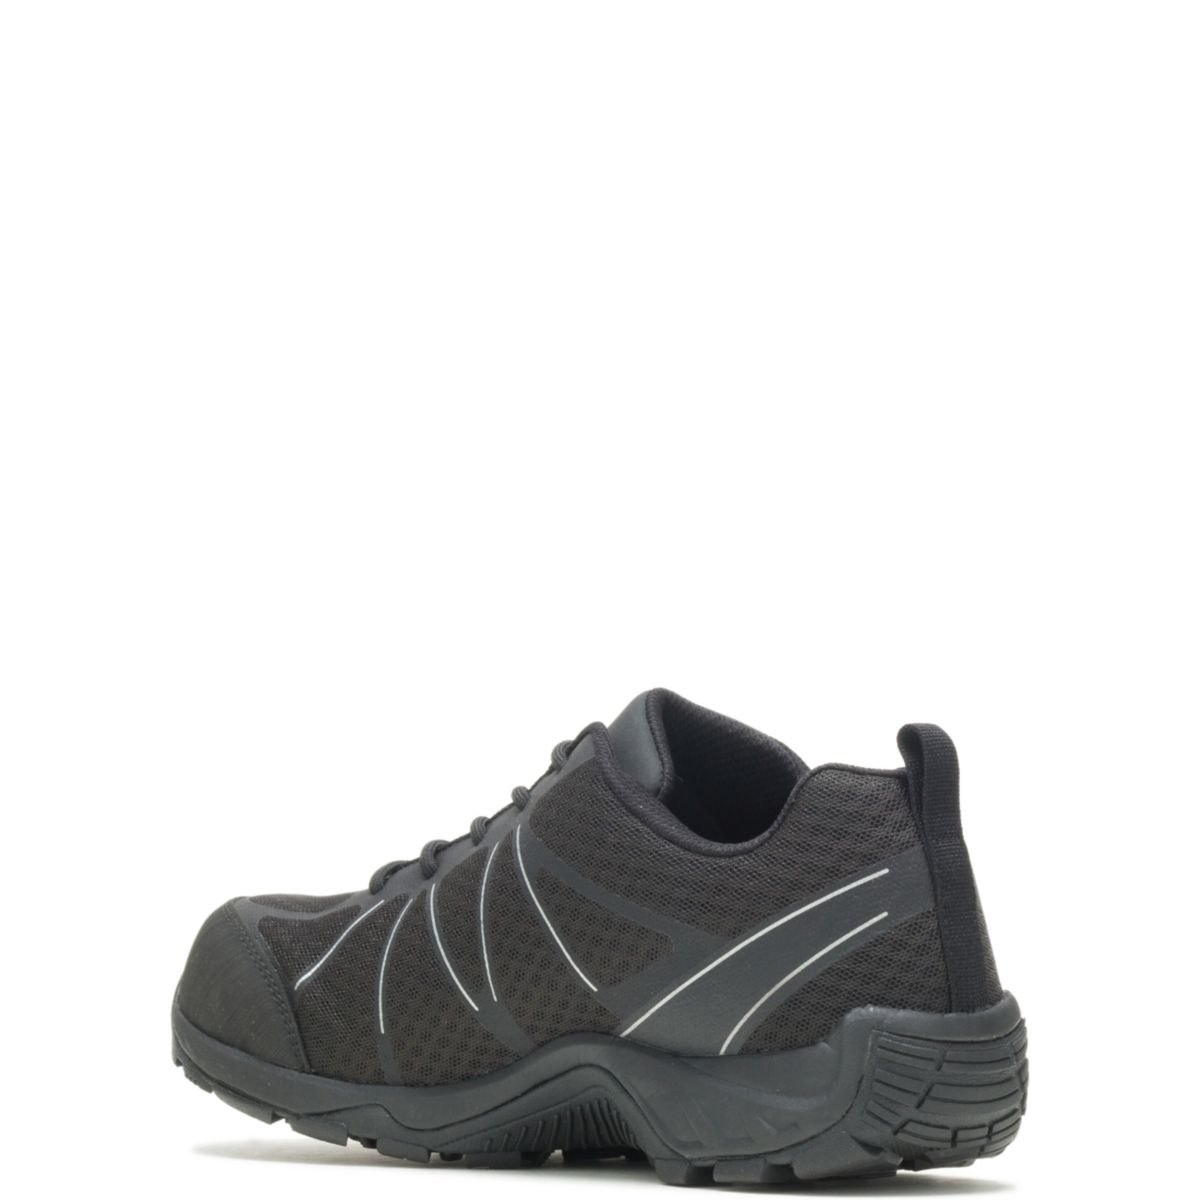 WOLVERINE Men's Amherst II CarbonMAXÂ® Composite Toe Work Shoe Black - W201147 BLACK - BLACK, 11